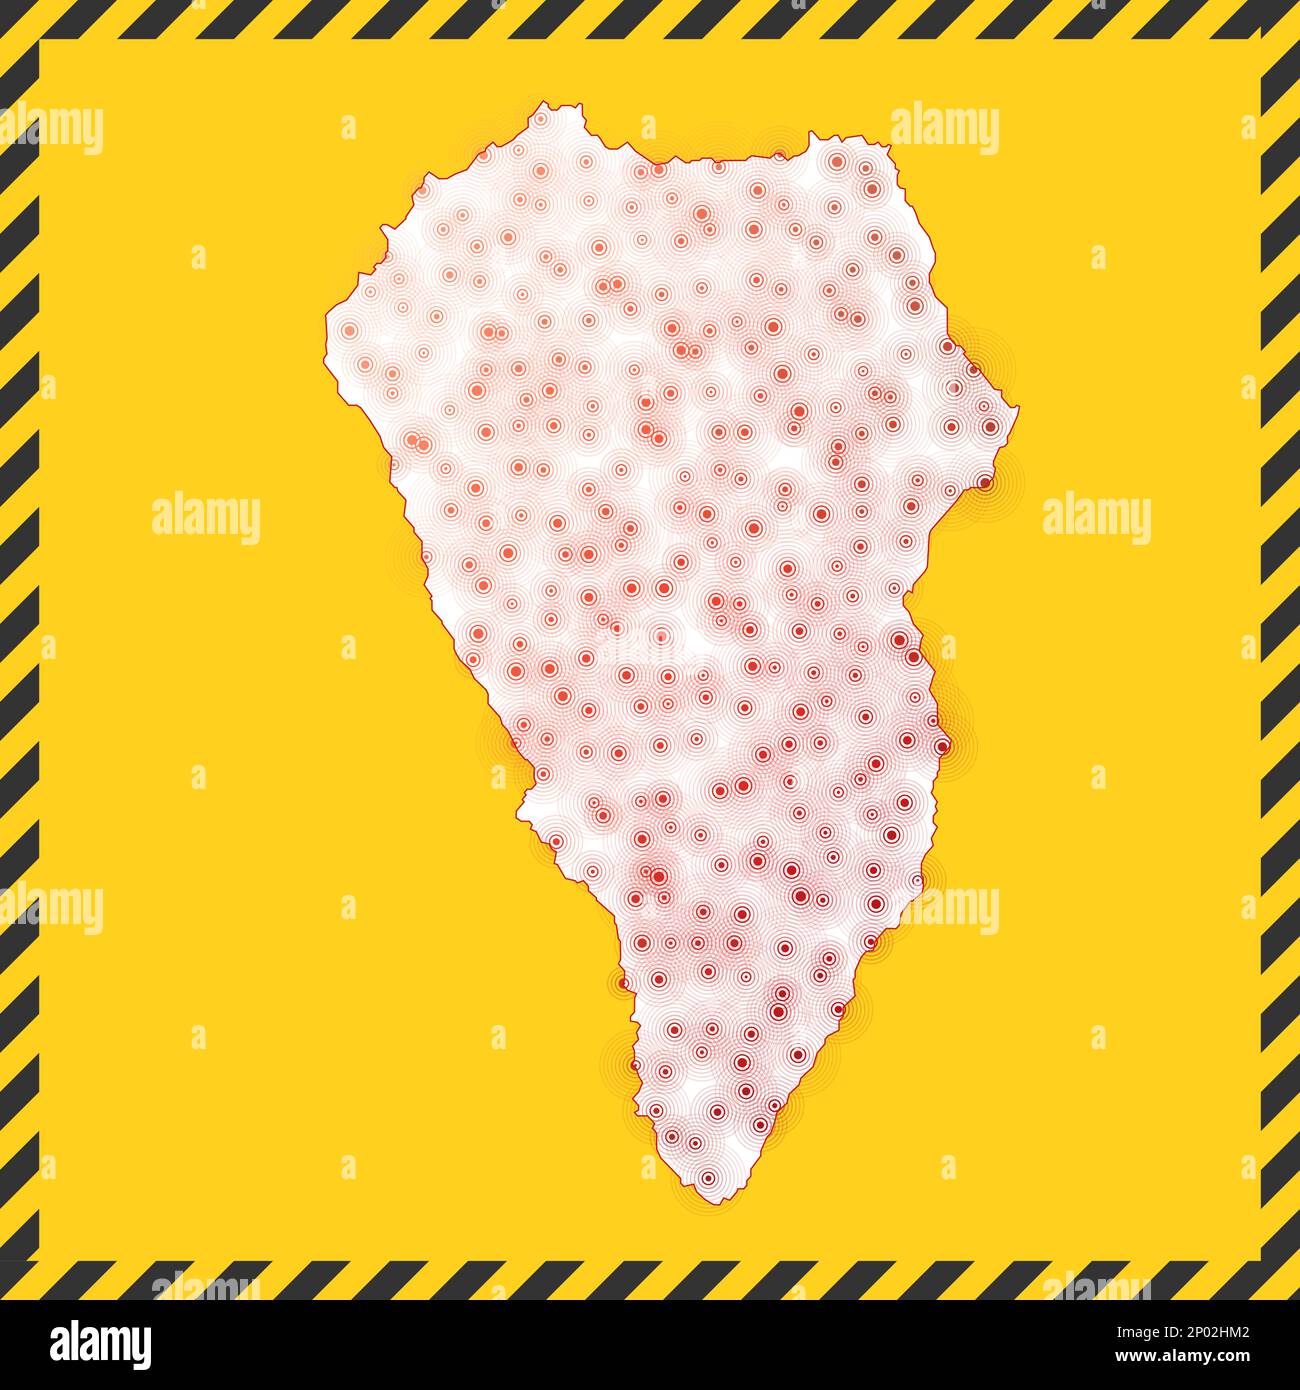 La Palma closed - virus danger sign. Lock down island icon. Black striped border around map with virus spread concept. Vector illustration. Stock Vector